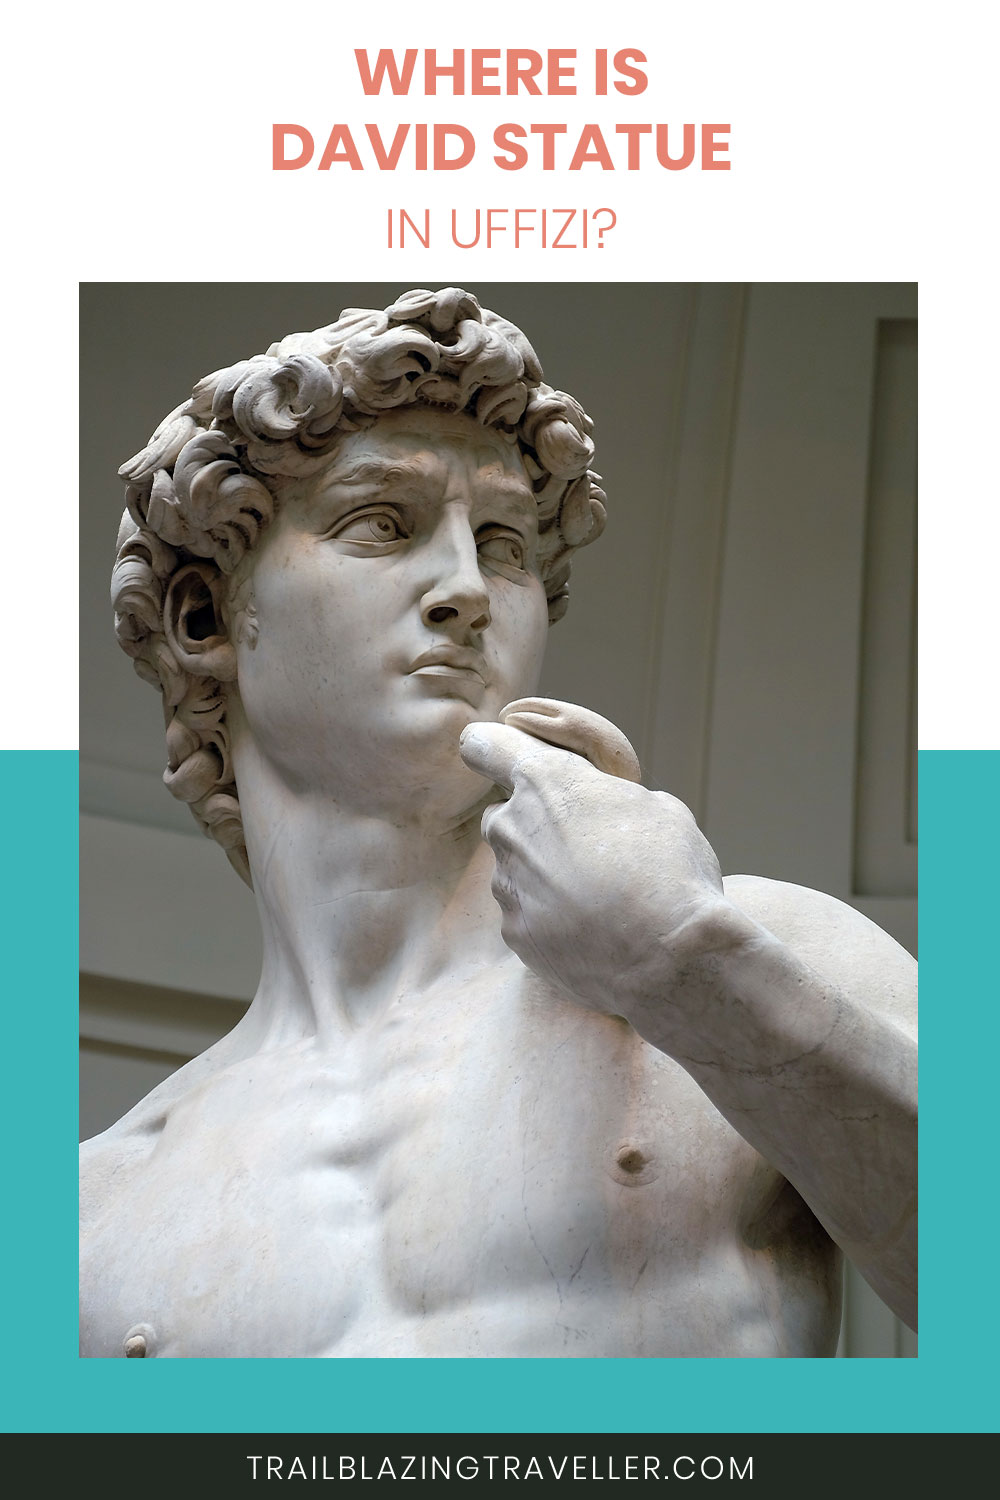 David Statue - Where Is it in Uffizi?